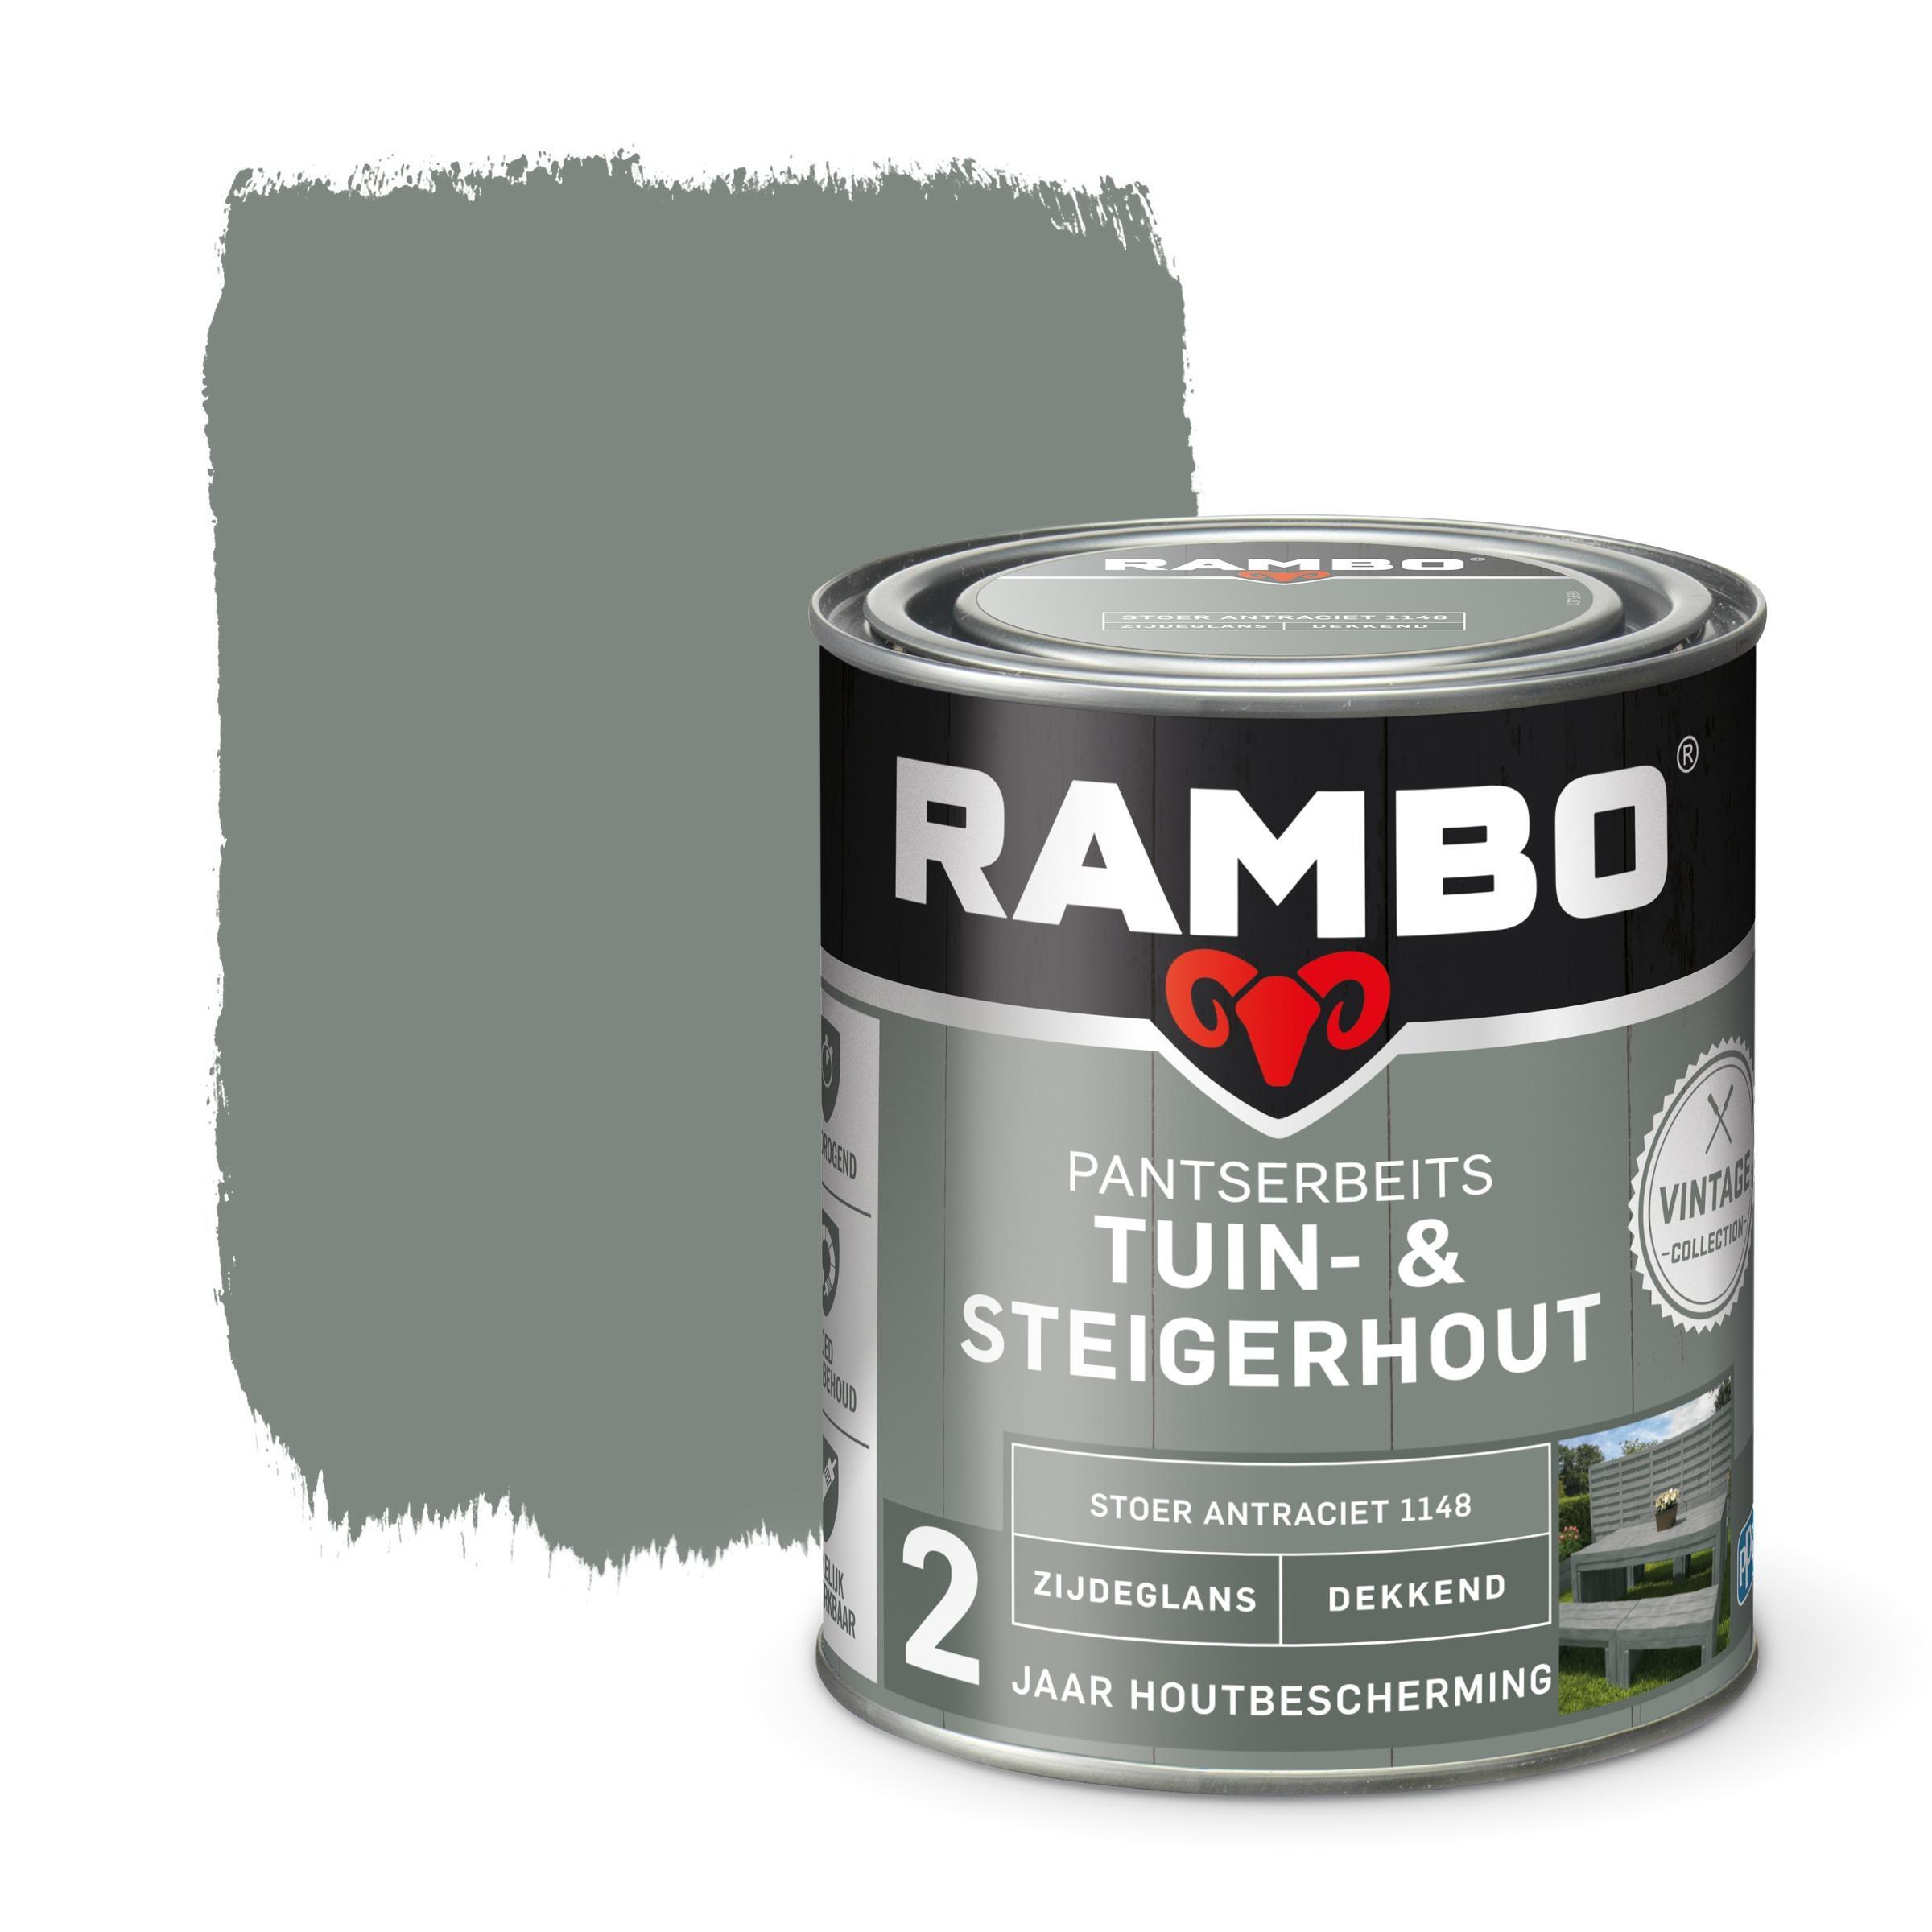 Rambo vintage pantserbeits tuin- en steigerhout dekkend stoer antraciet zijdeglans 750 ml